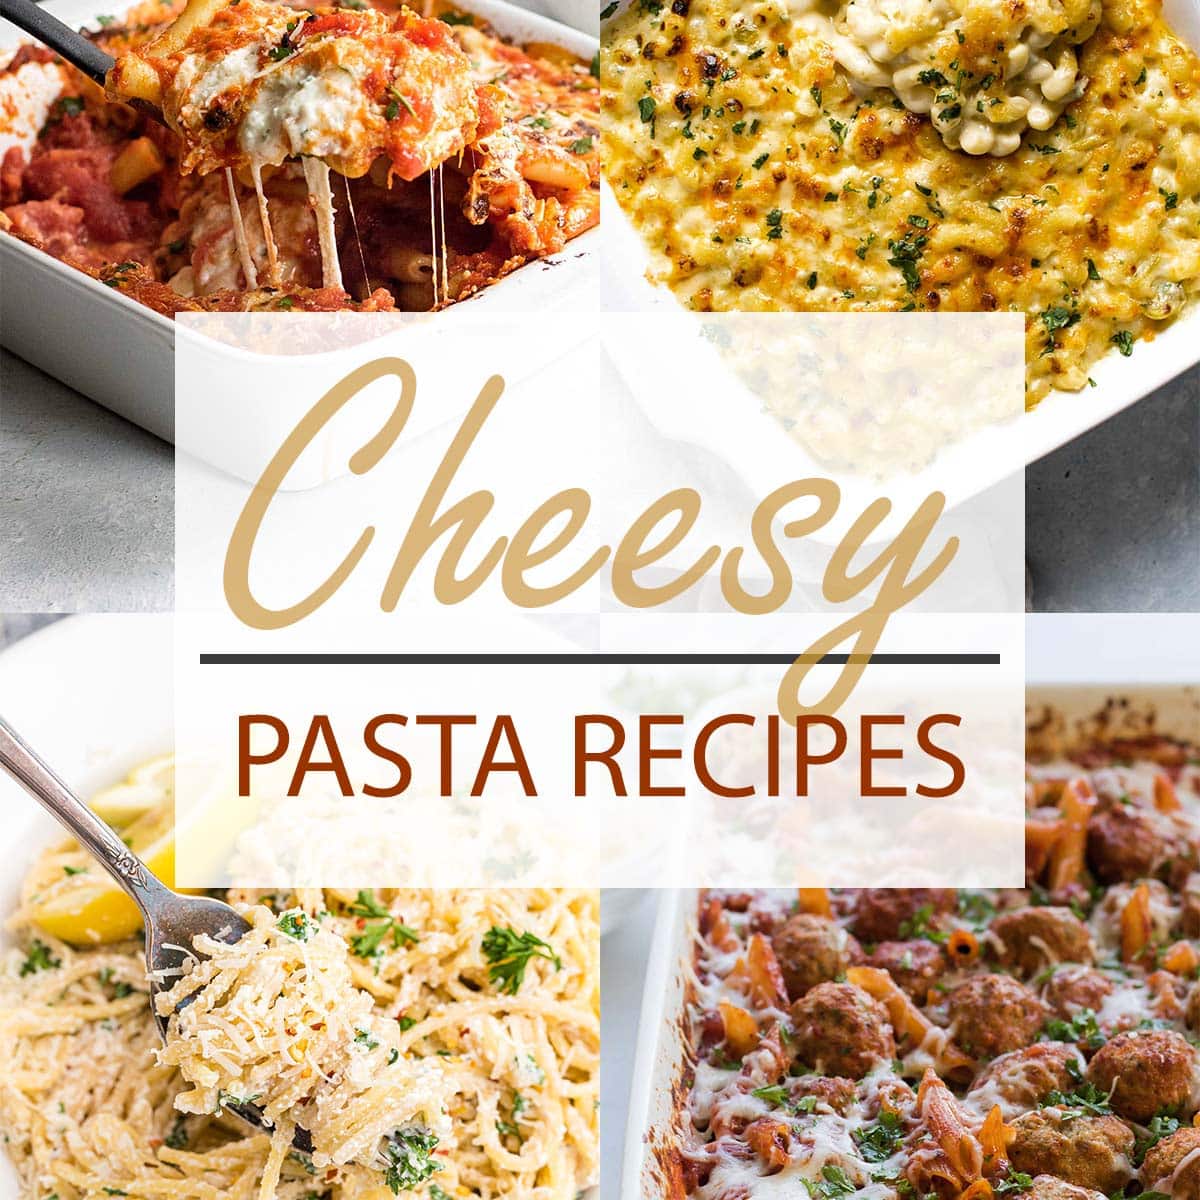 cheesy pasta recipes photo collage.